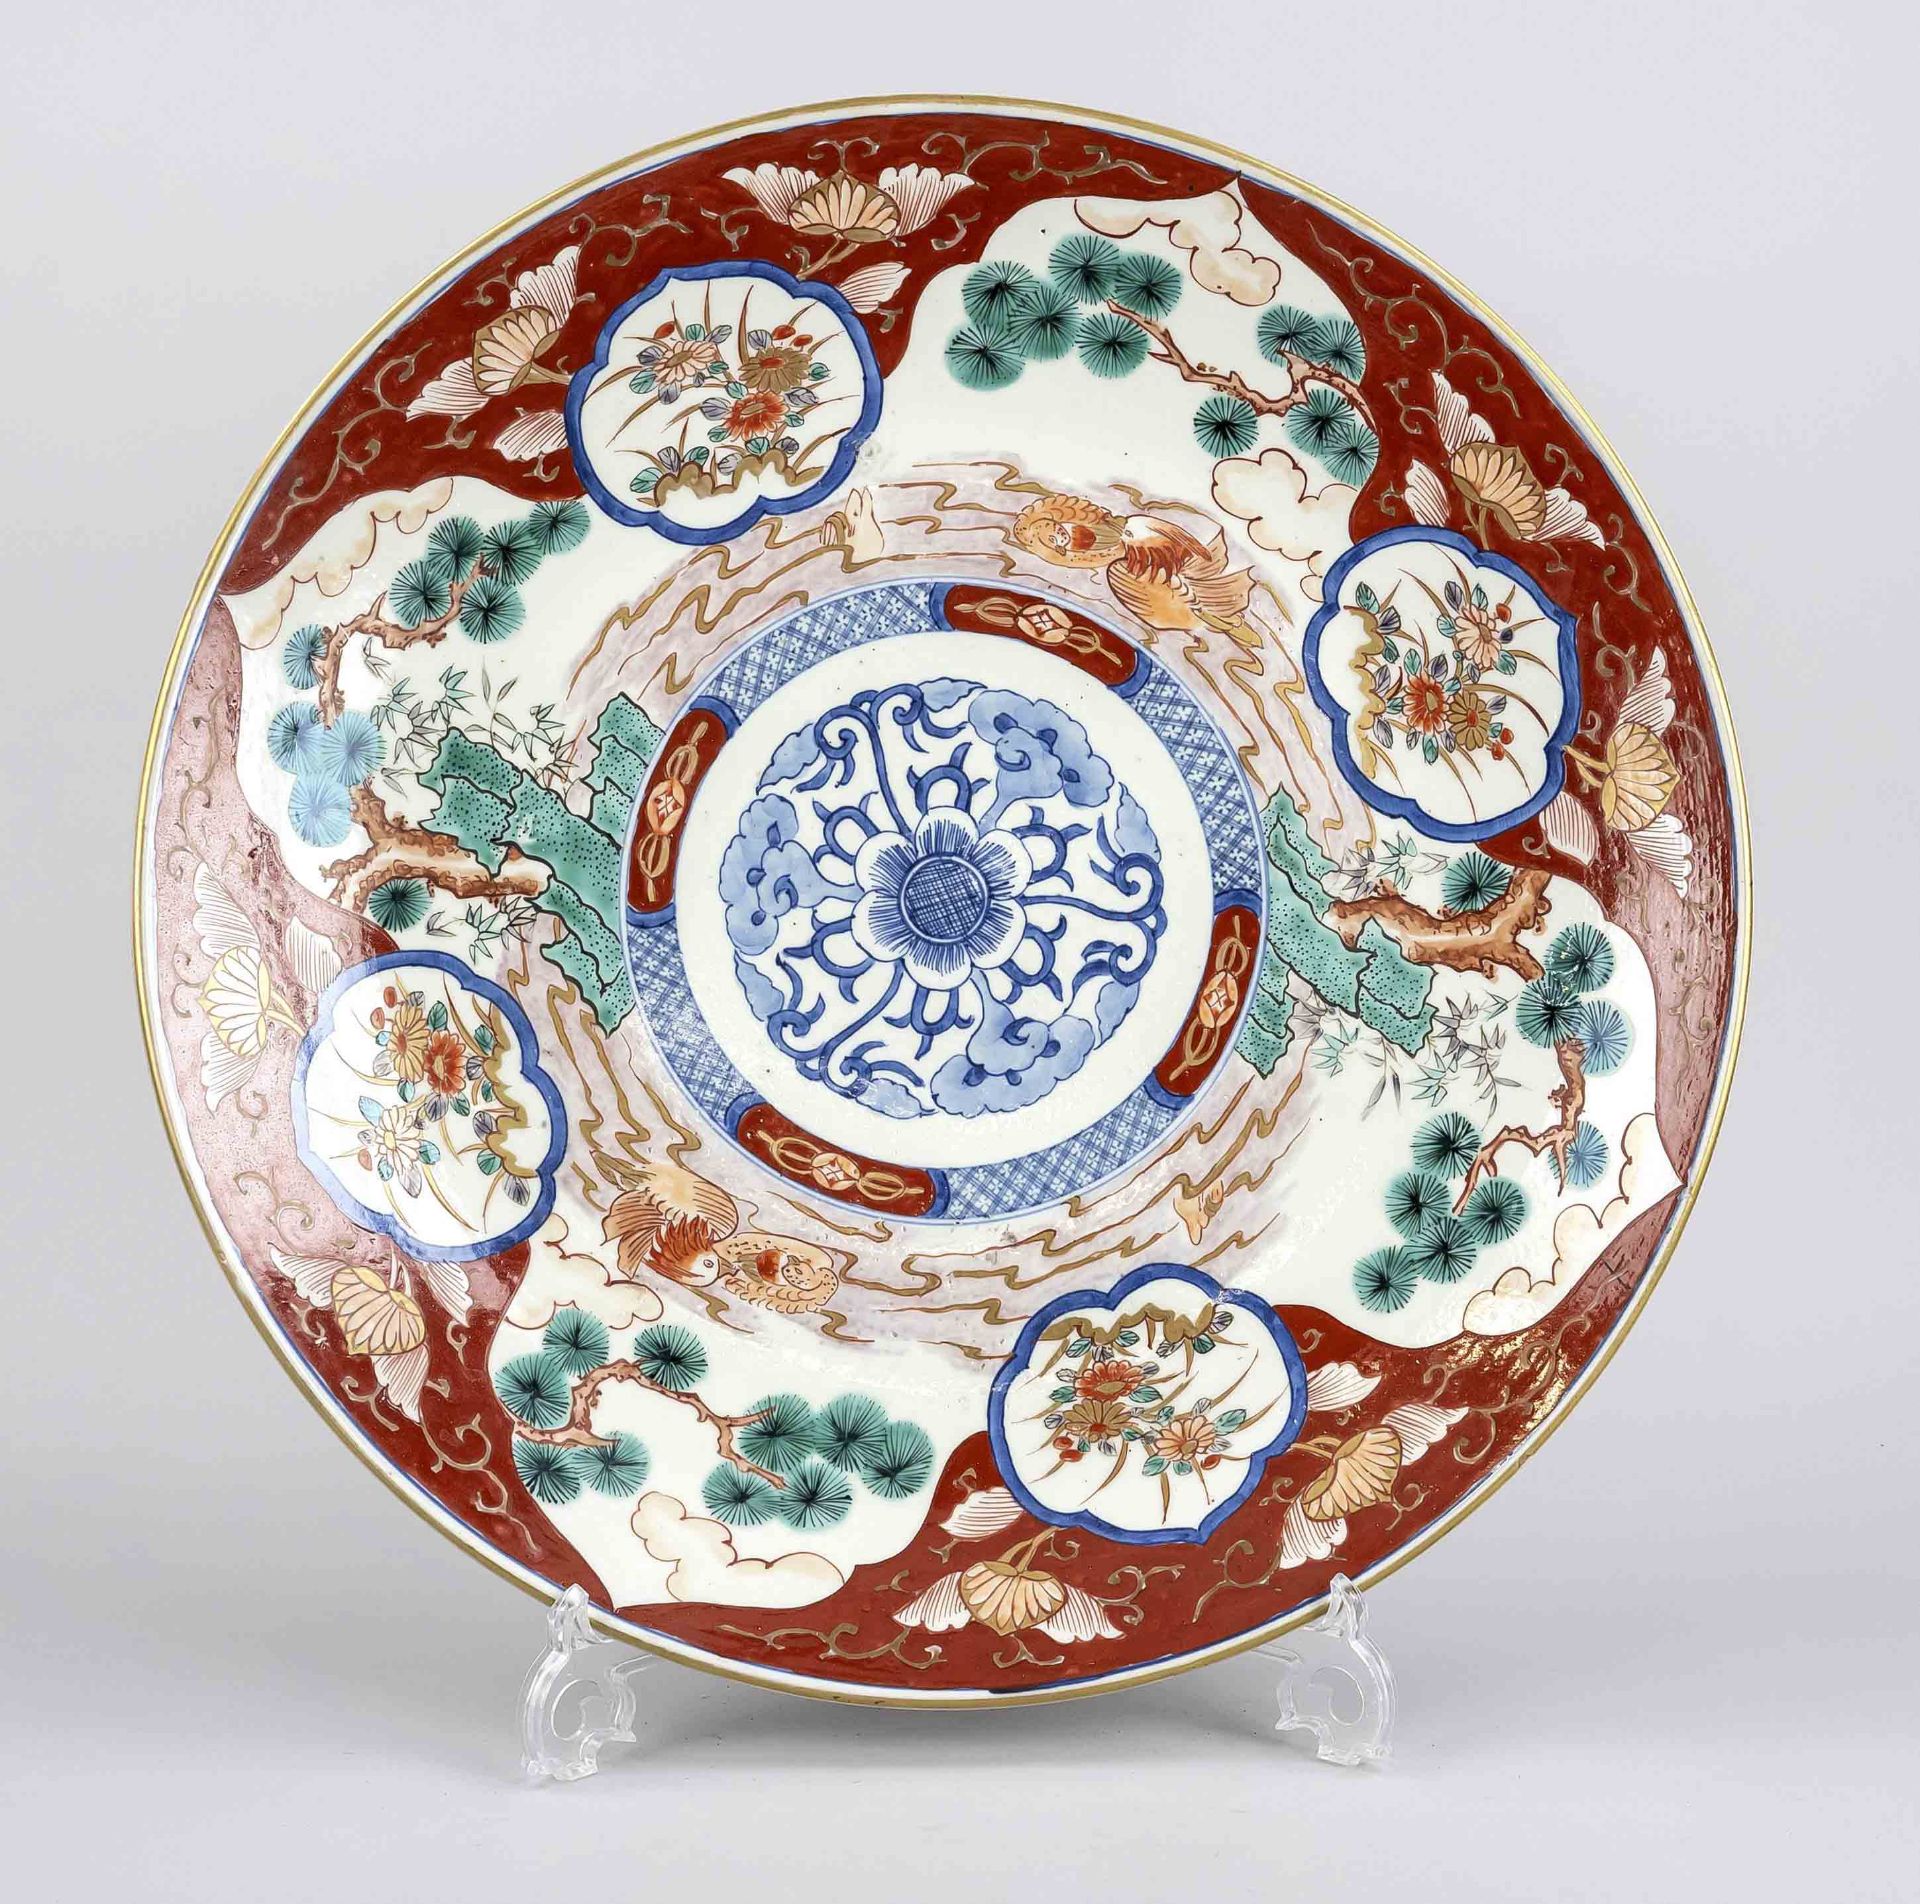 Large Imari plate ''Mandarin ducks under pine trees'', Japan, 19th century, porcelain with